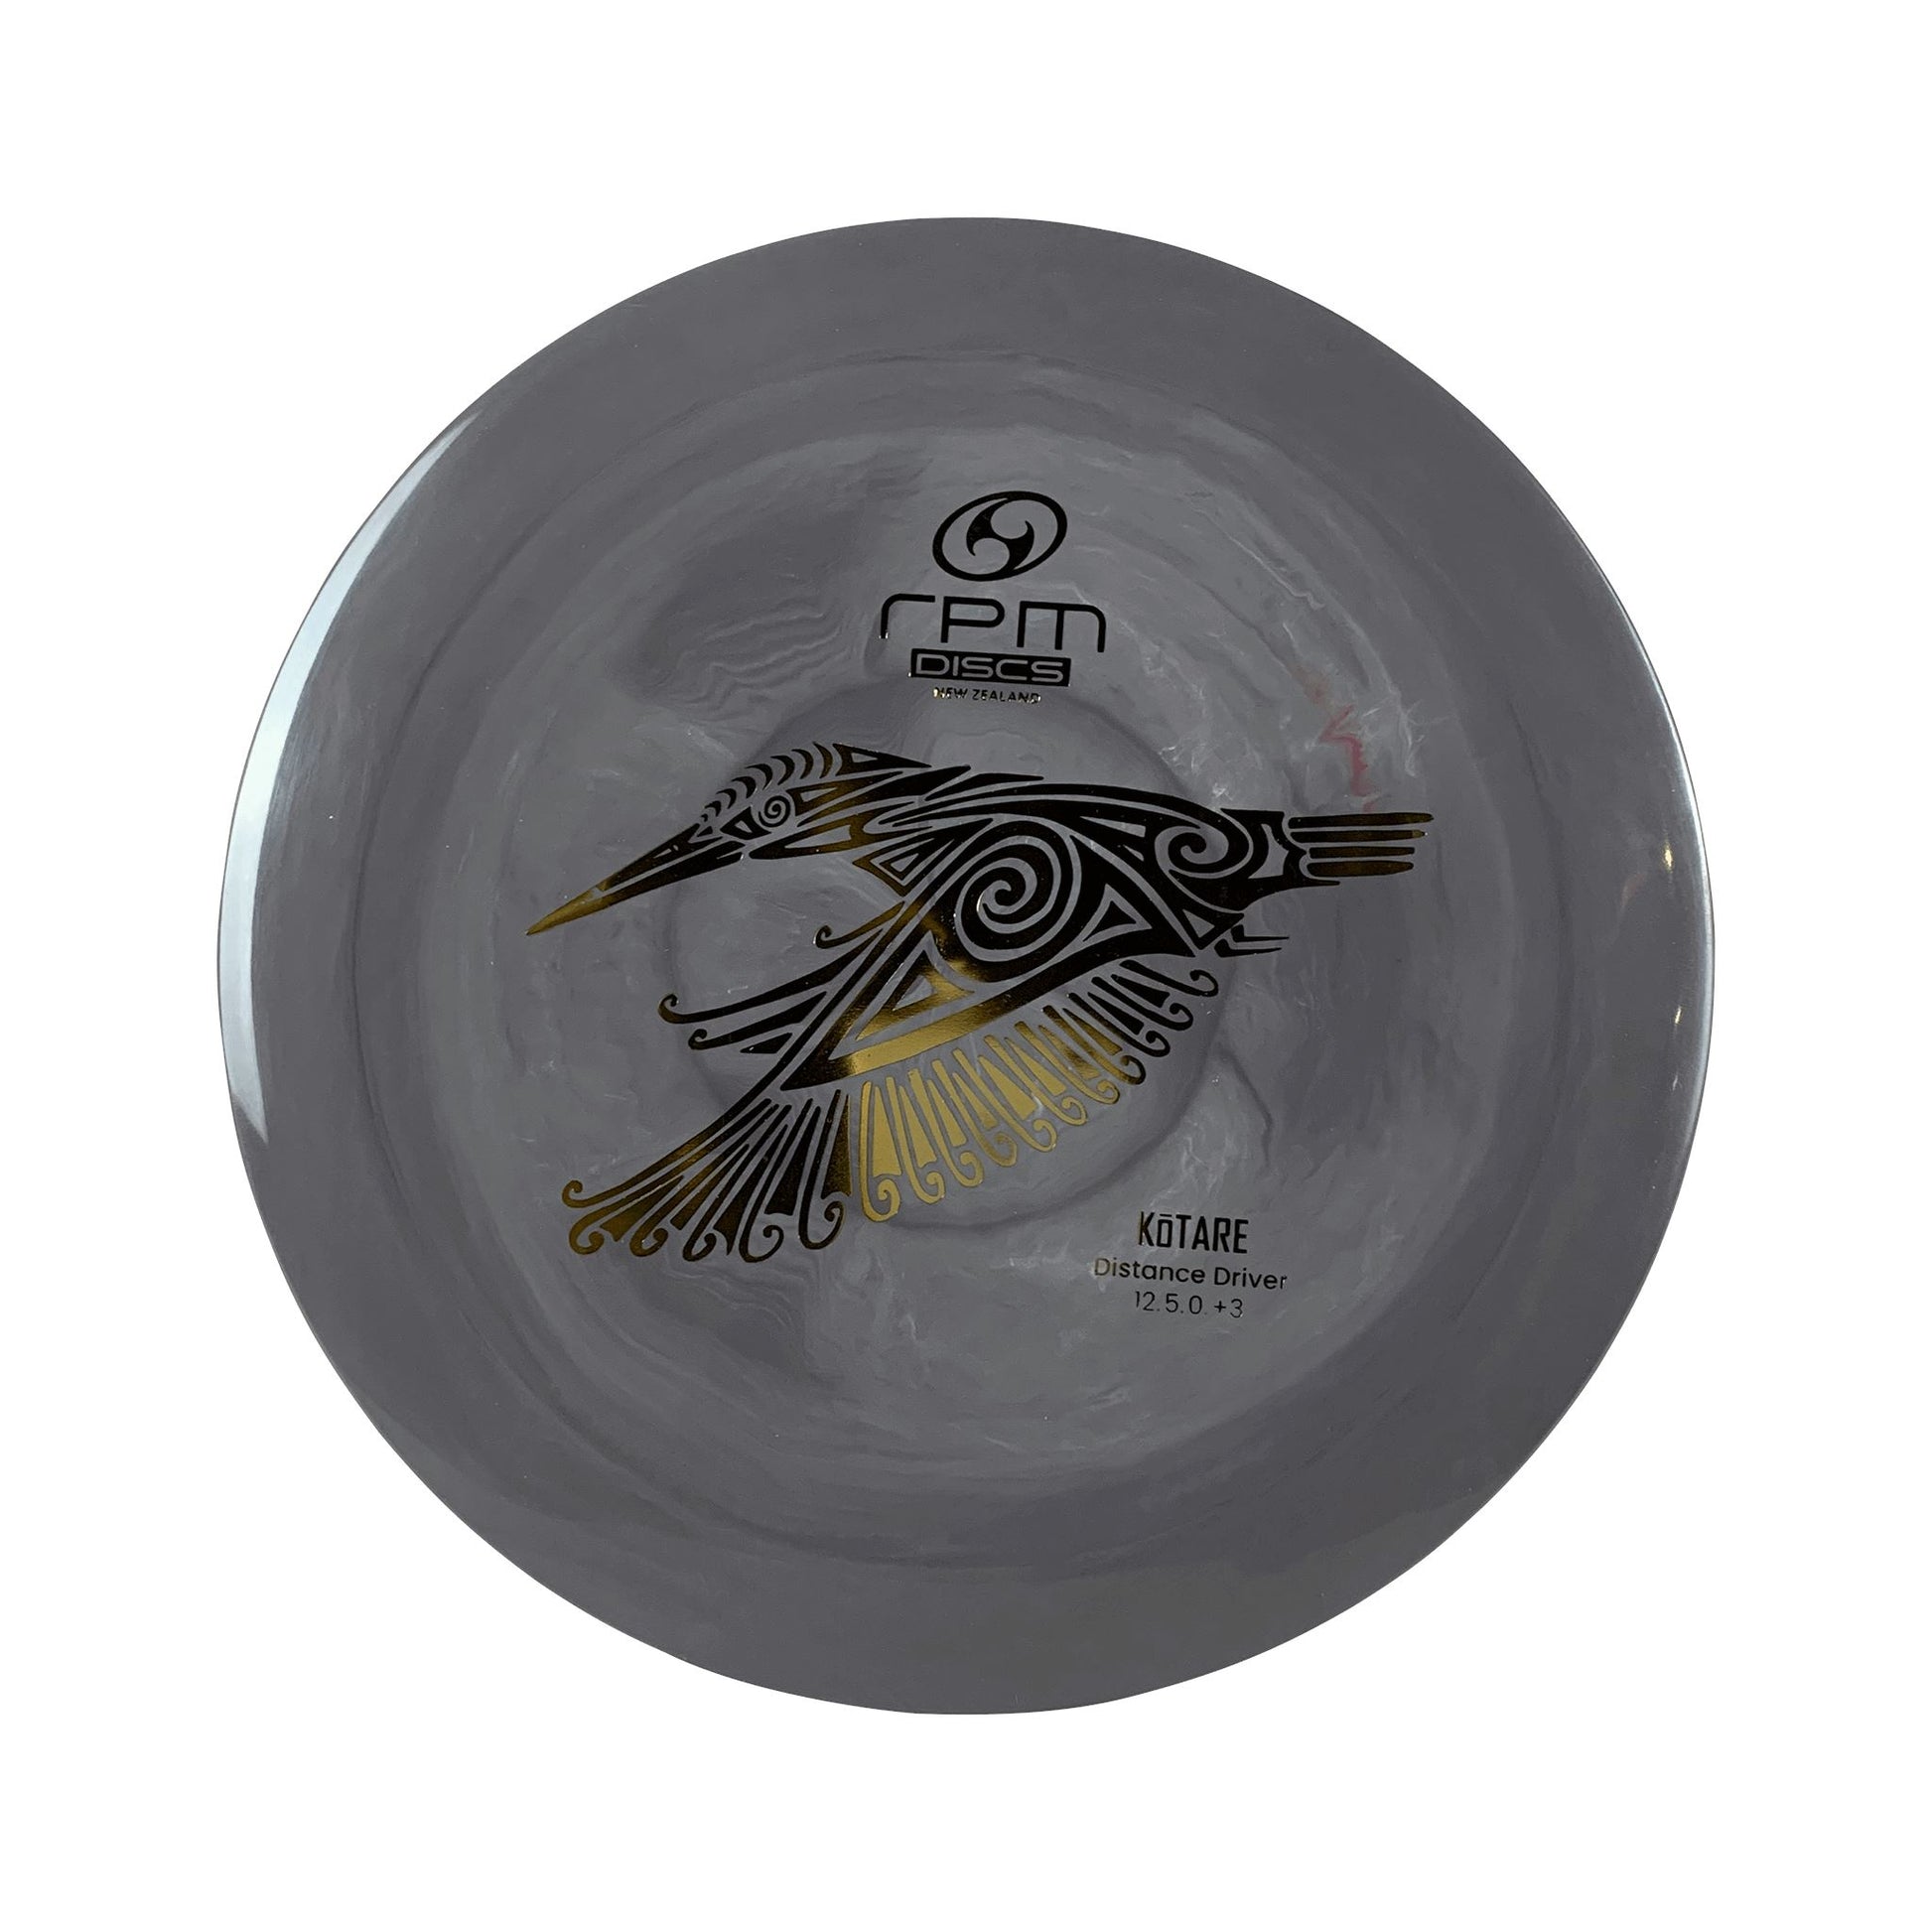 Atomic Kotare Disc RPM Discs grey 171 